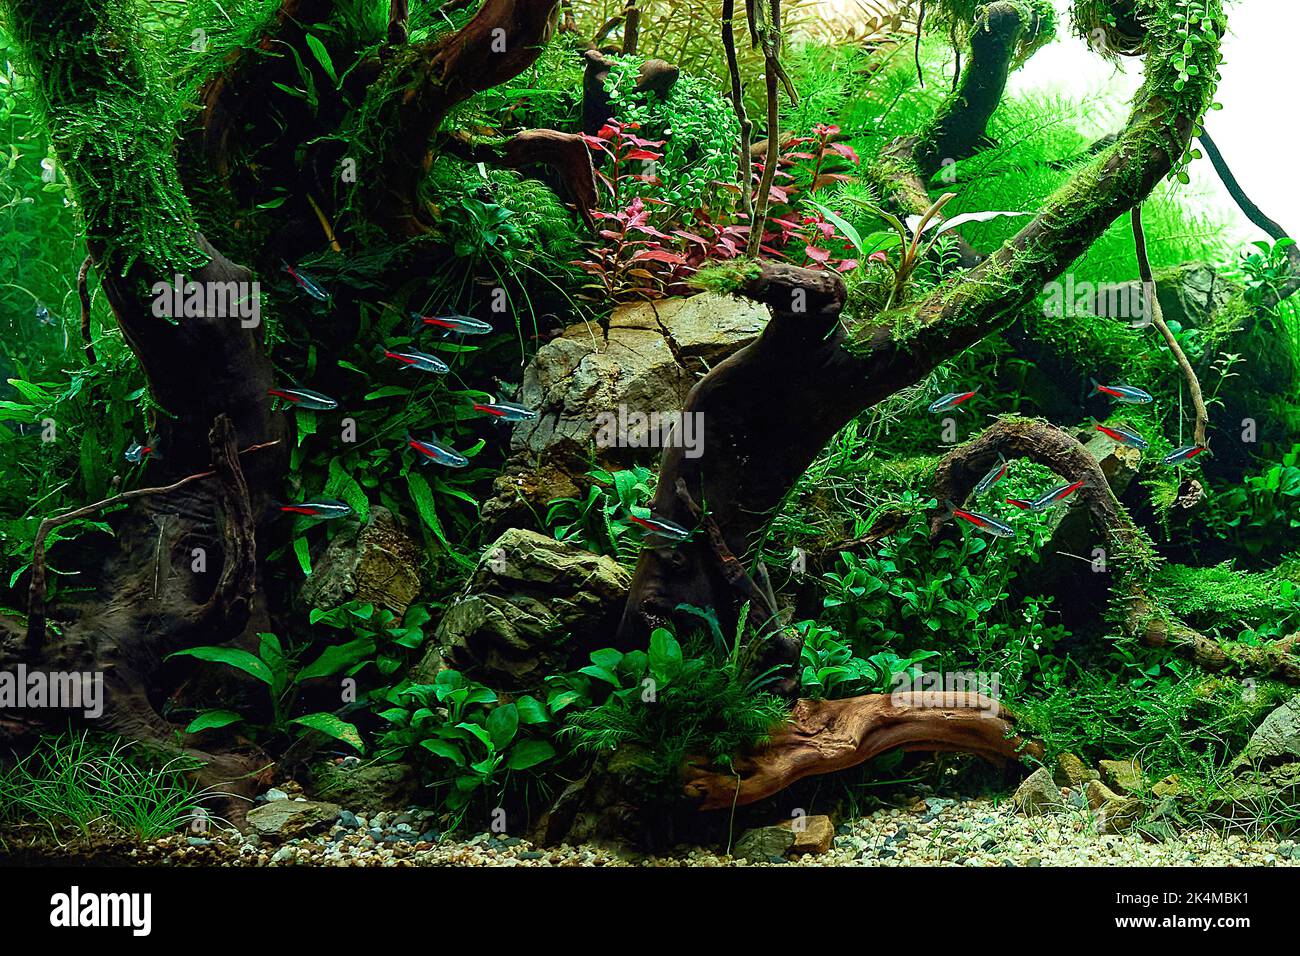 Aquascaped freshwater aquarium with neon fish school, live plants, Frodo stones and Redmoor roots. Jungle style aquascape. Microsorum Trident, various rotalas, anubias, moss. Stock Photo